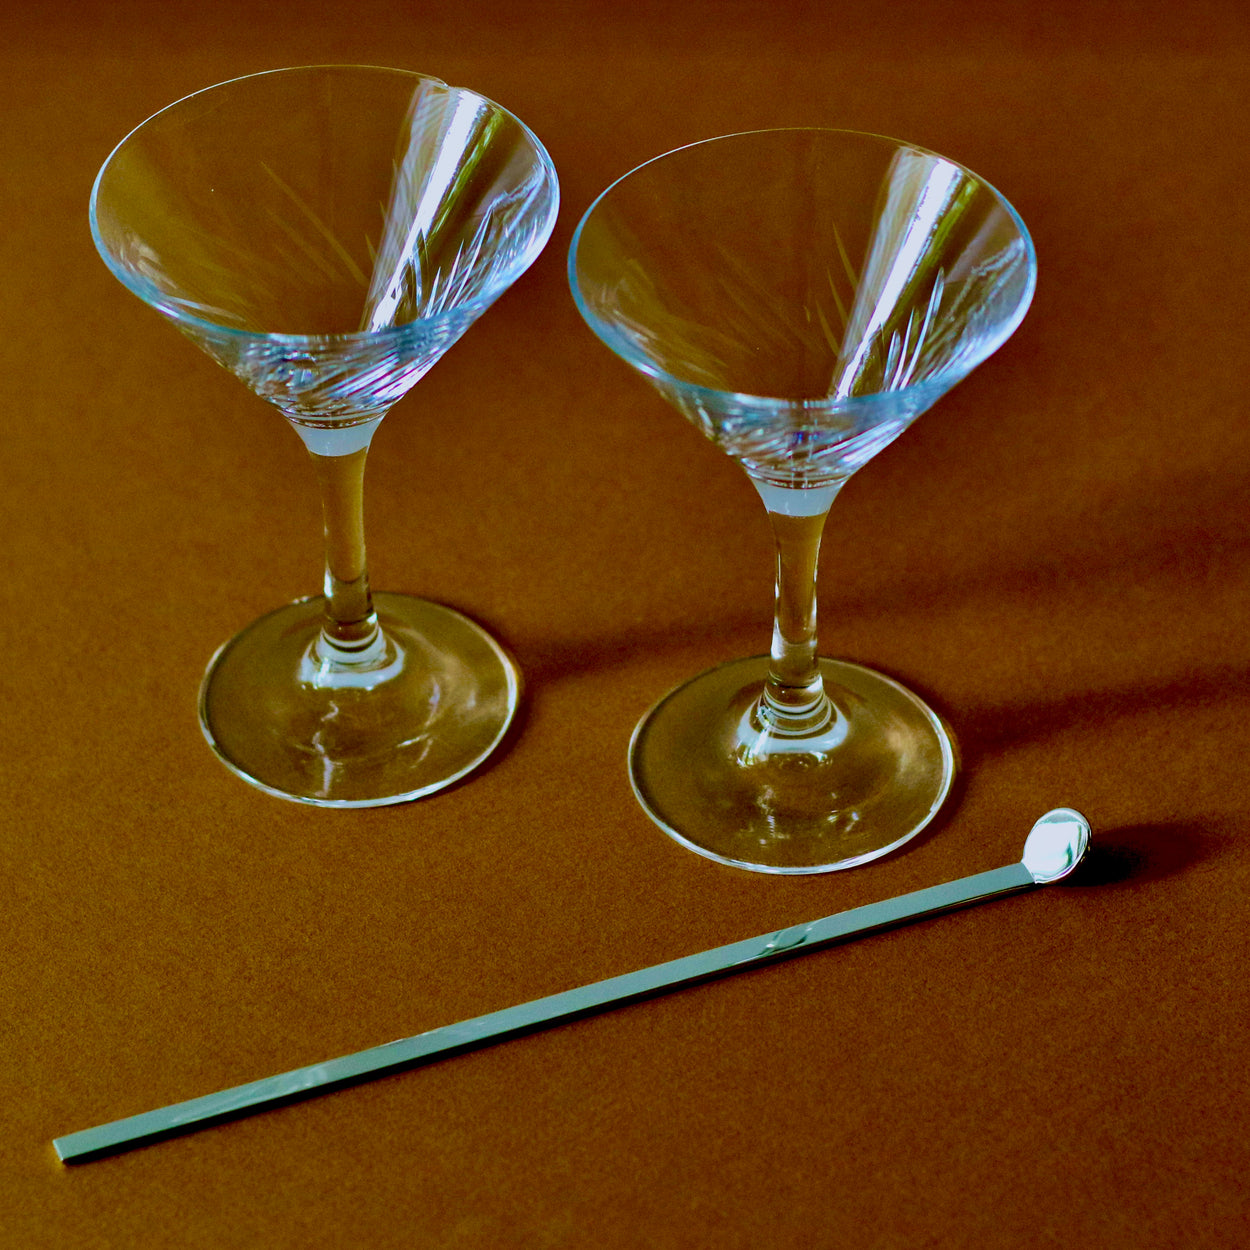 2 martini glasses and Japanese Cocktail Muddler.